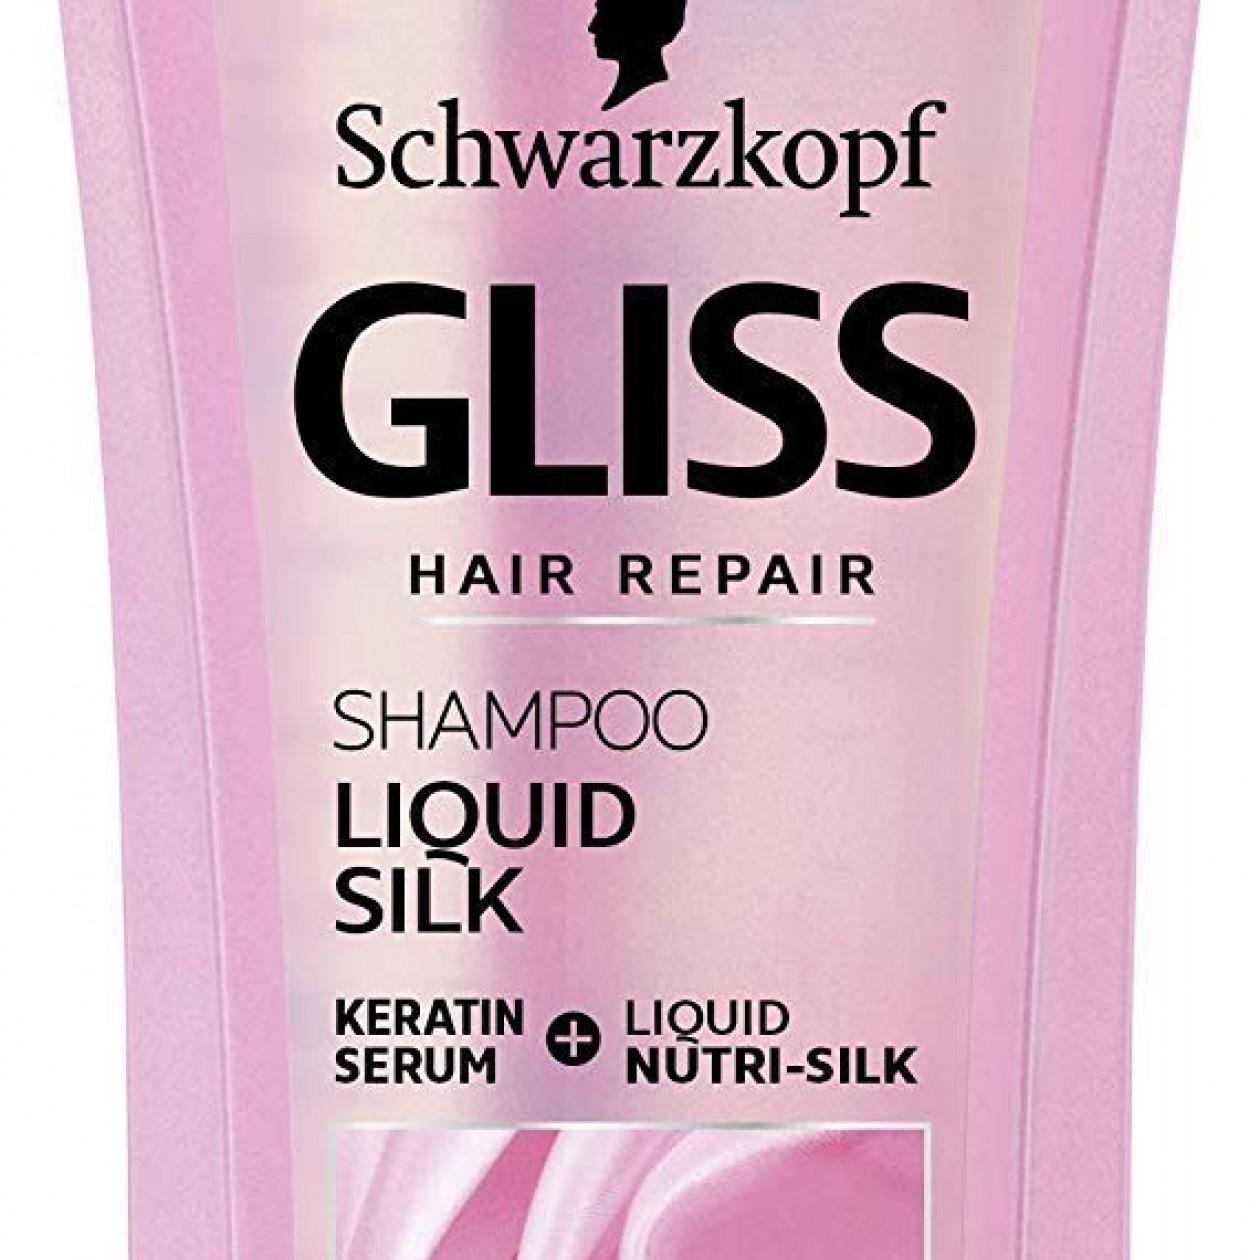 Schwarzkopf Gliss Shampoo Liquid Silk 200mL